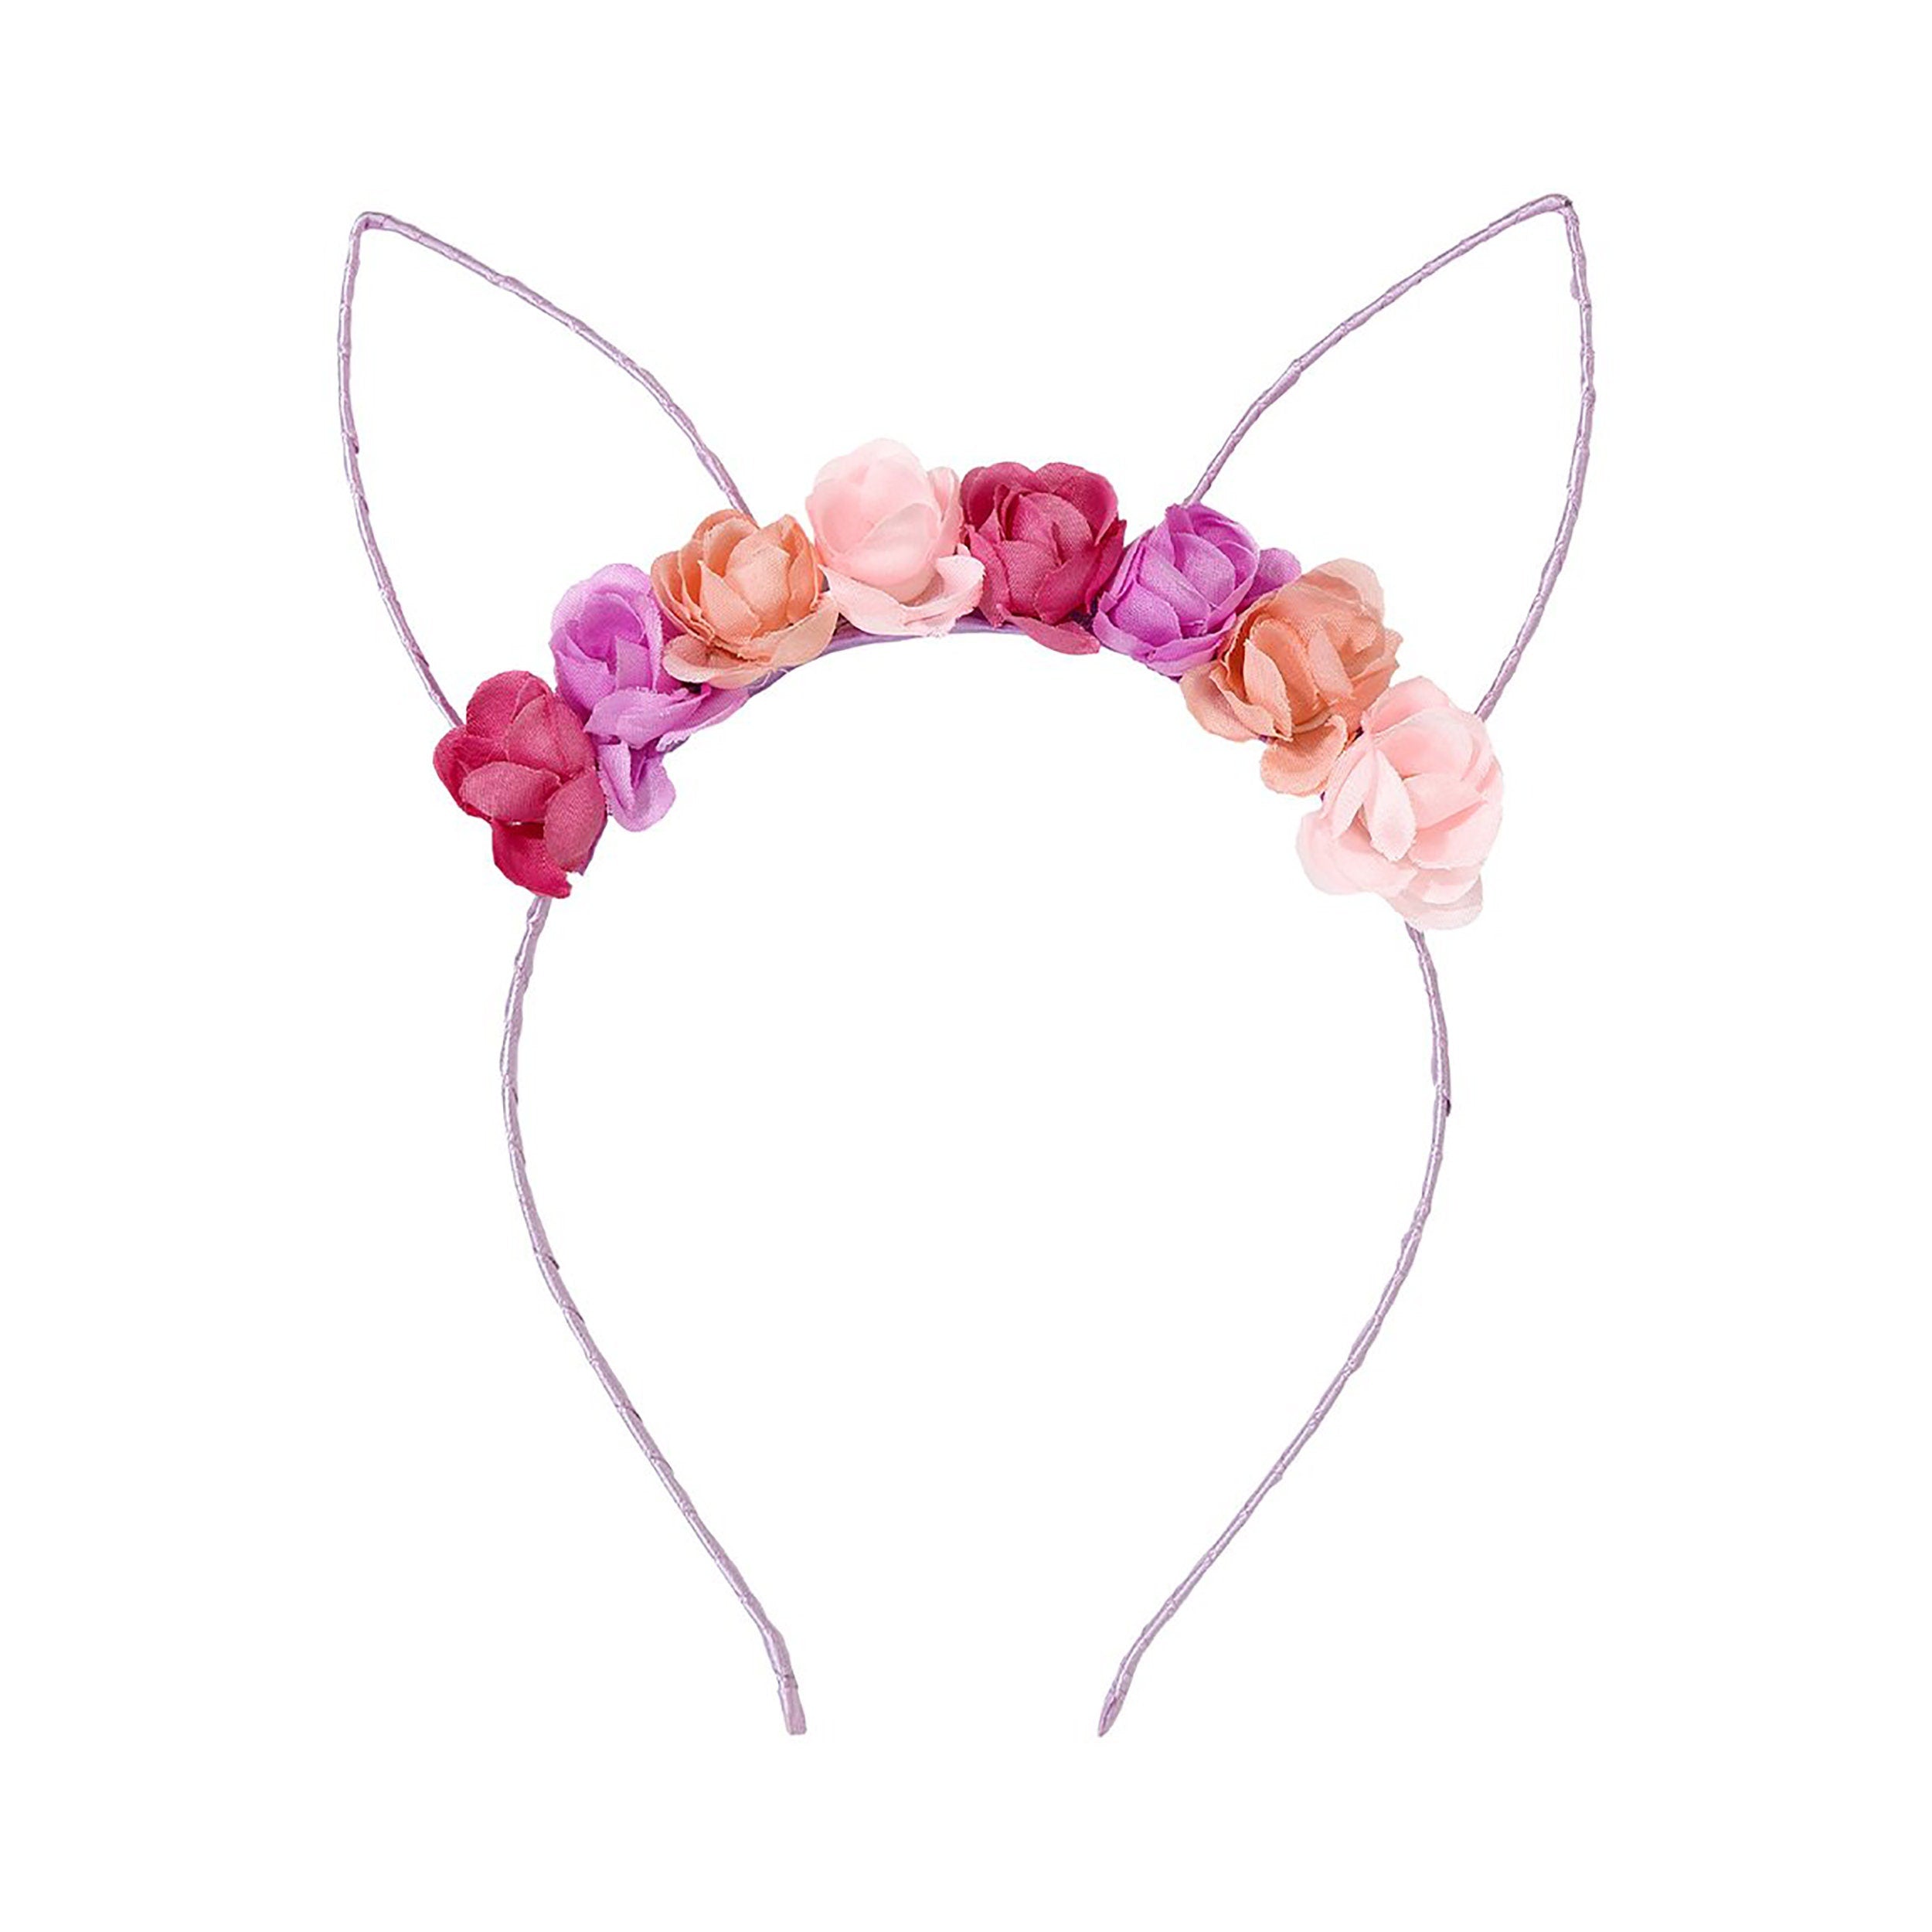 Bunny Ears Headband | Easter Headband - Easter Ears - Easter Party Favors - Easter Dress Up - Easter Birthday Party - Rabbit Ear Headband